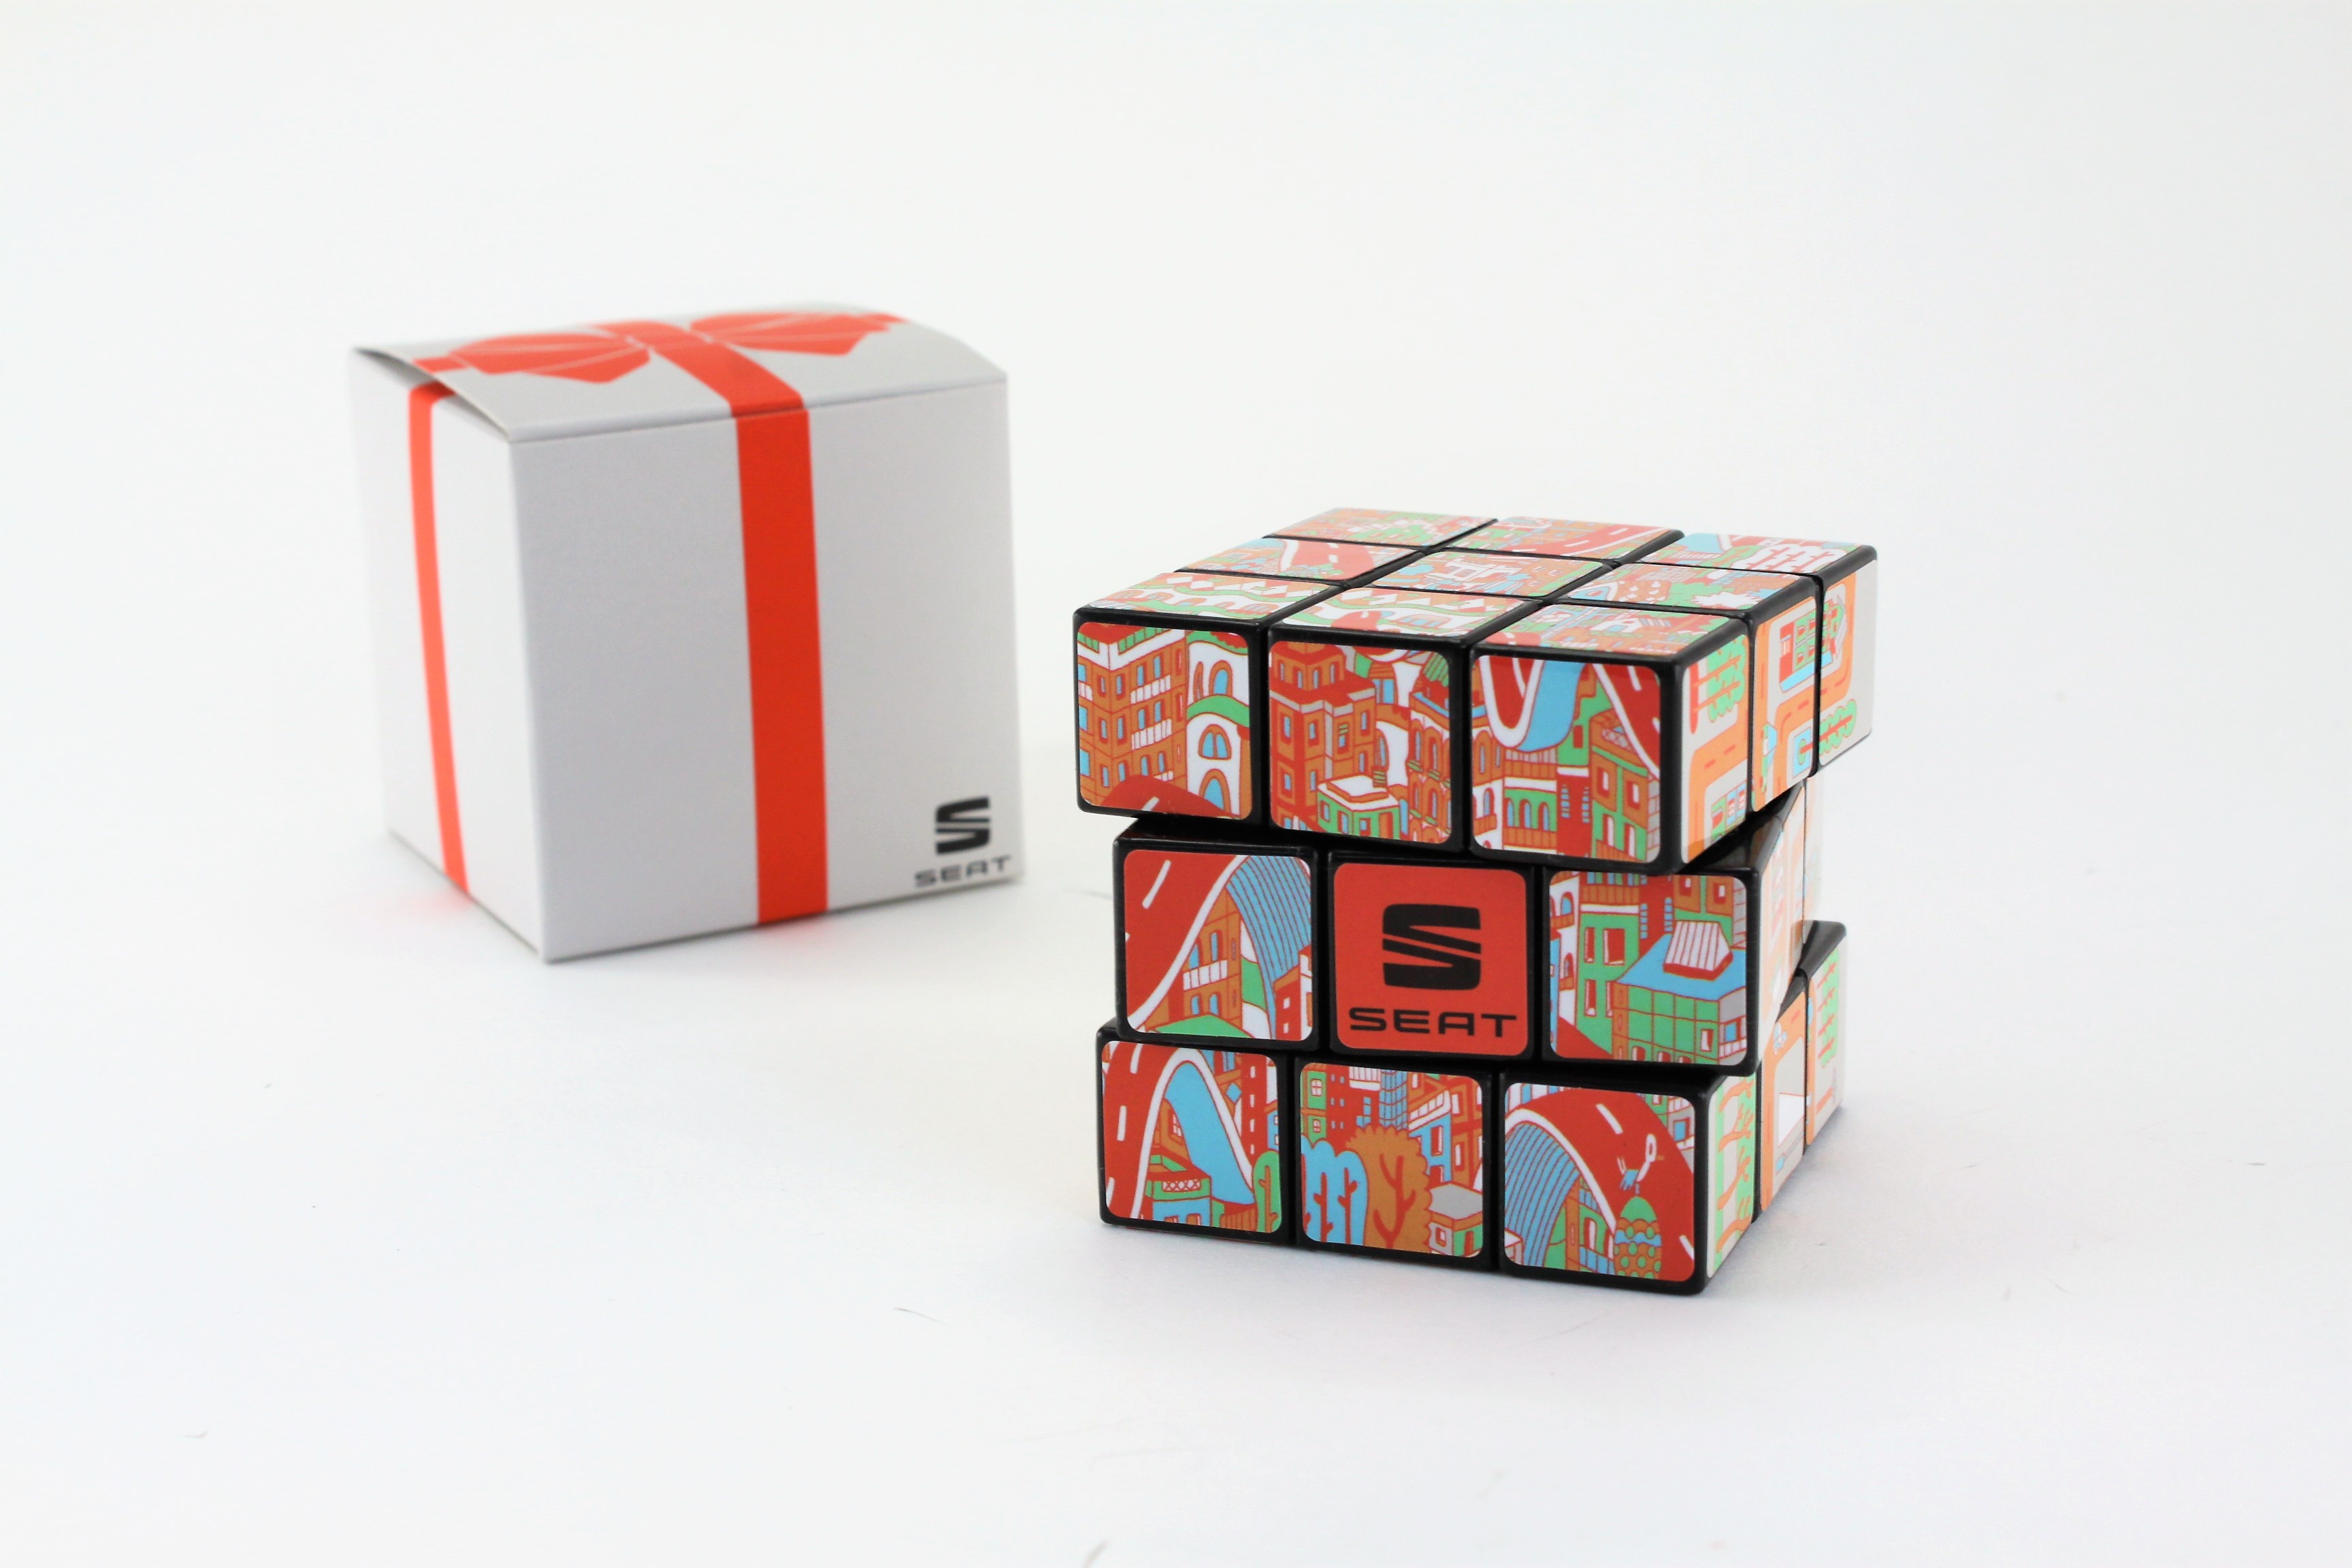 original rubik's cube in packaging with shrink wrap!